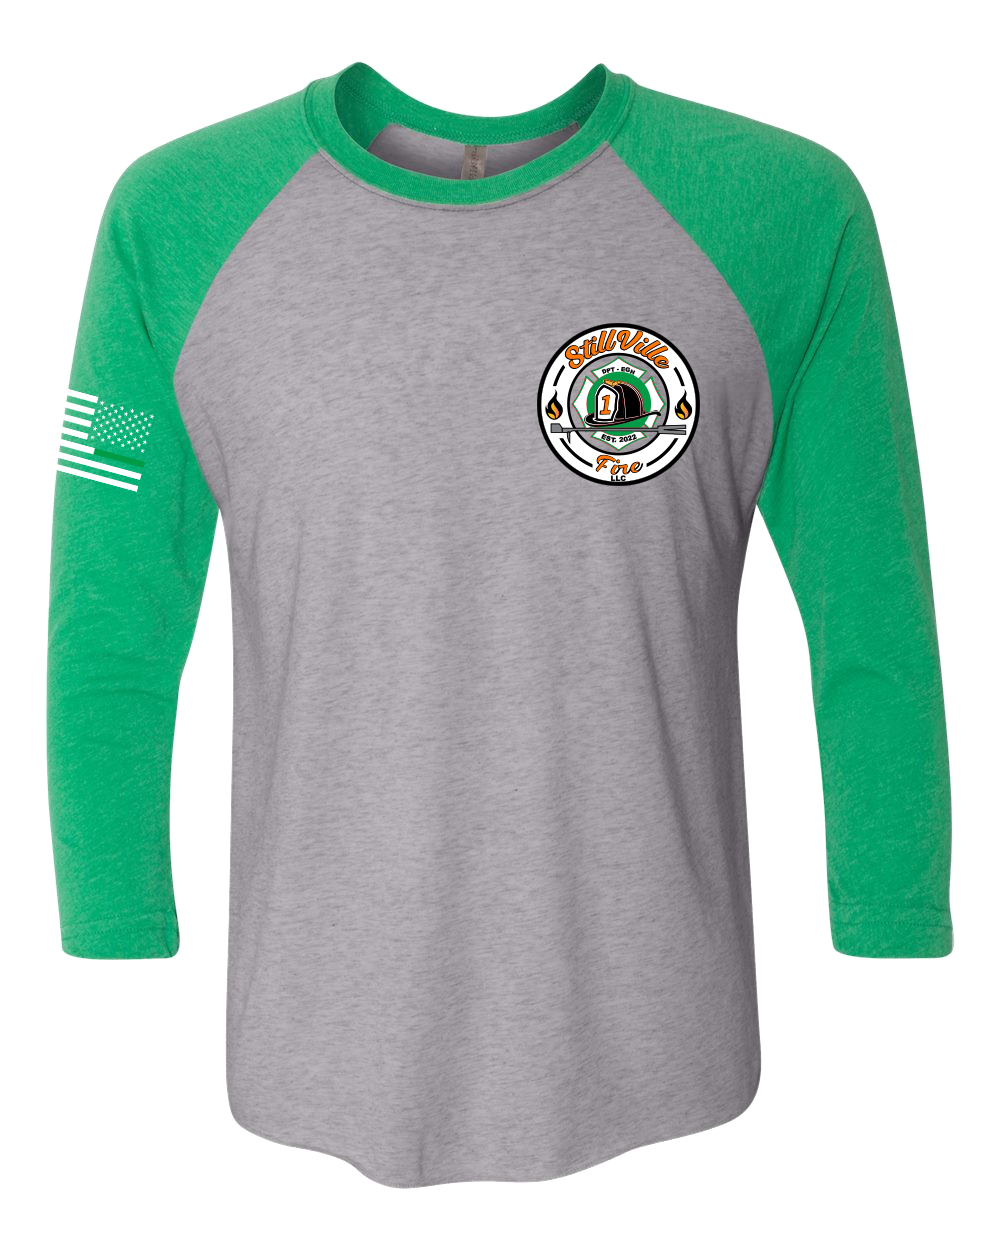 StillVille Irish Heritage 3/4 Raglan T-shirt - Green/Grey